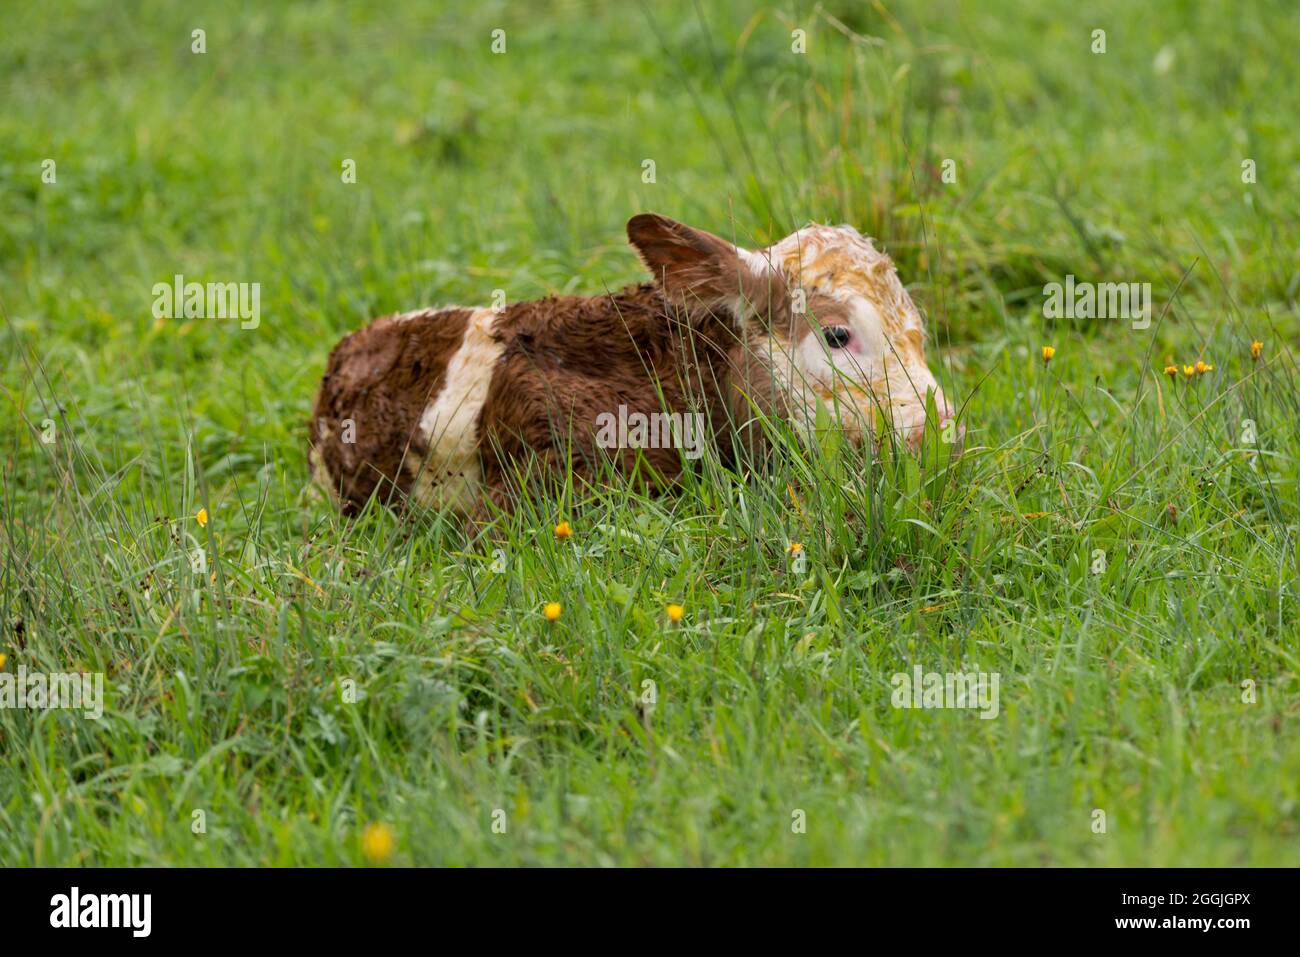 Newly born calf on the pasture, organic farming, mother animal husbandry Stock Photo